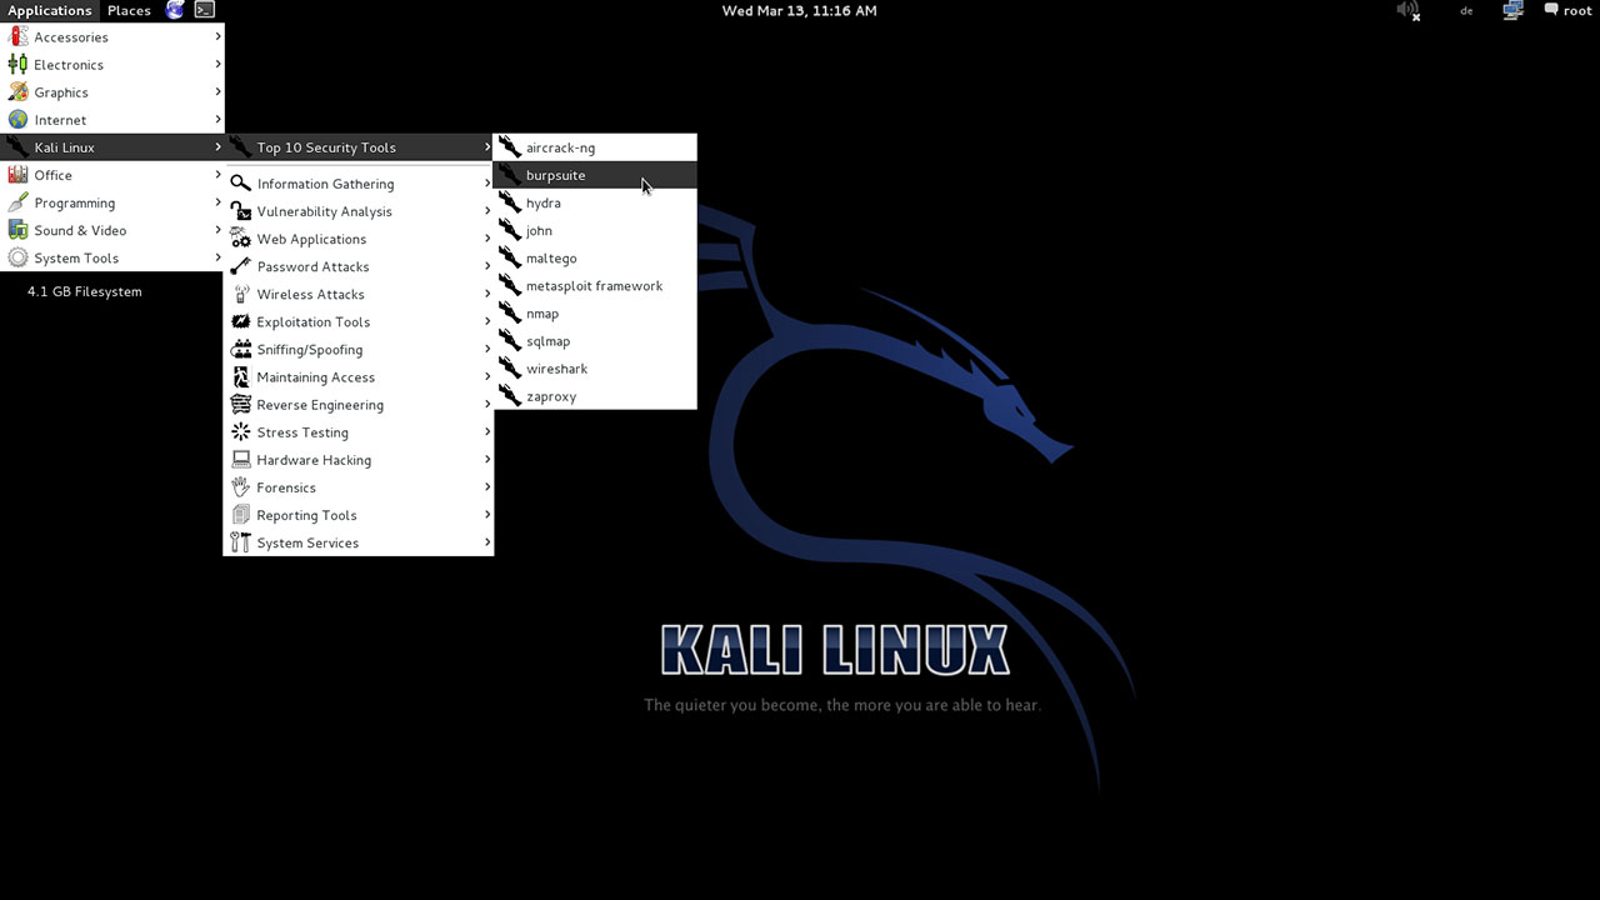 download kali linux mac